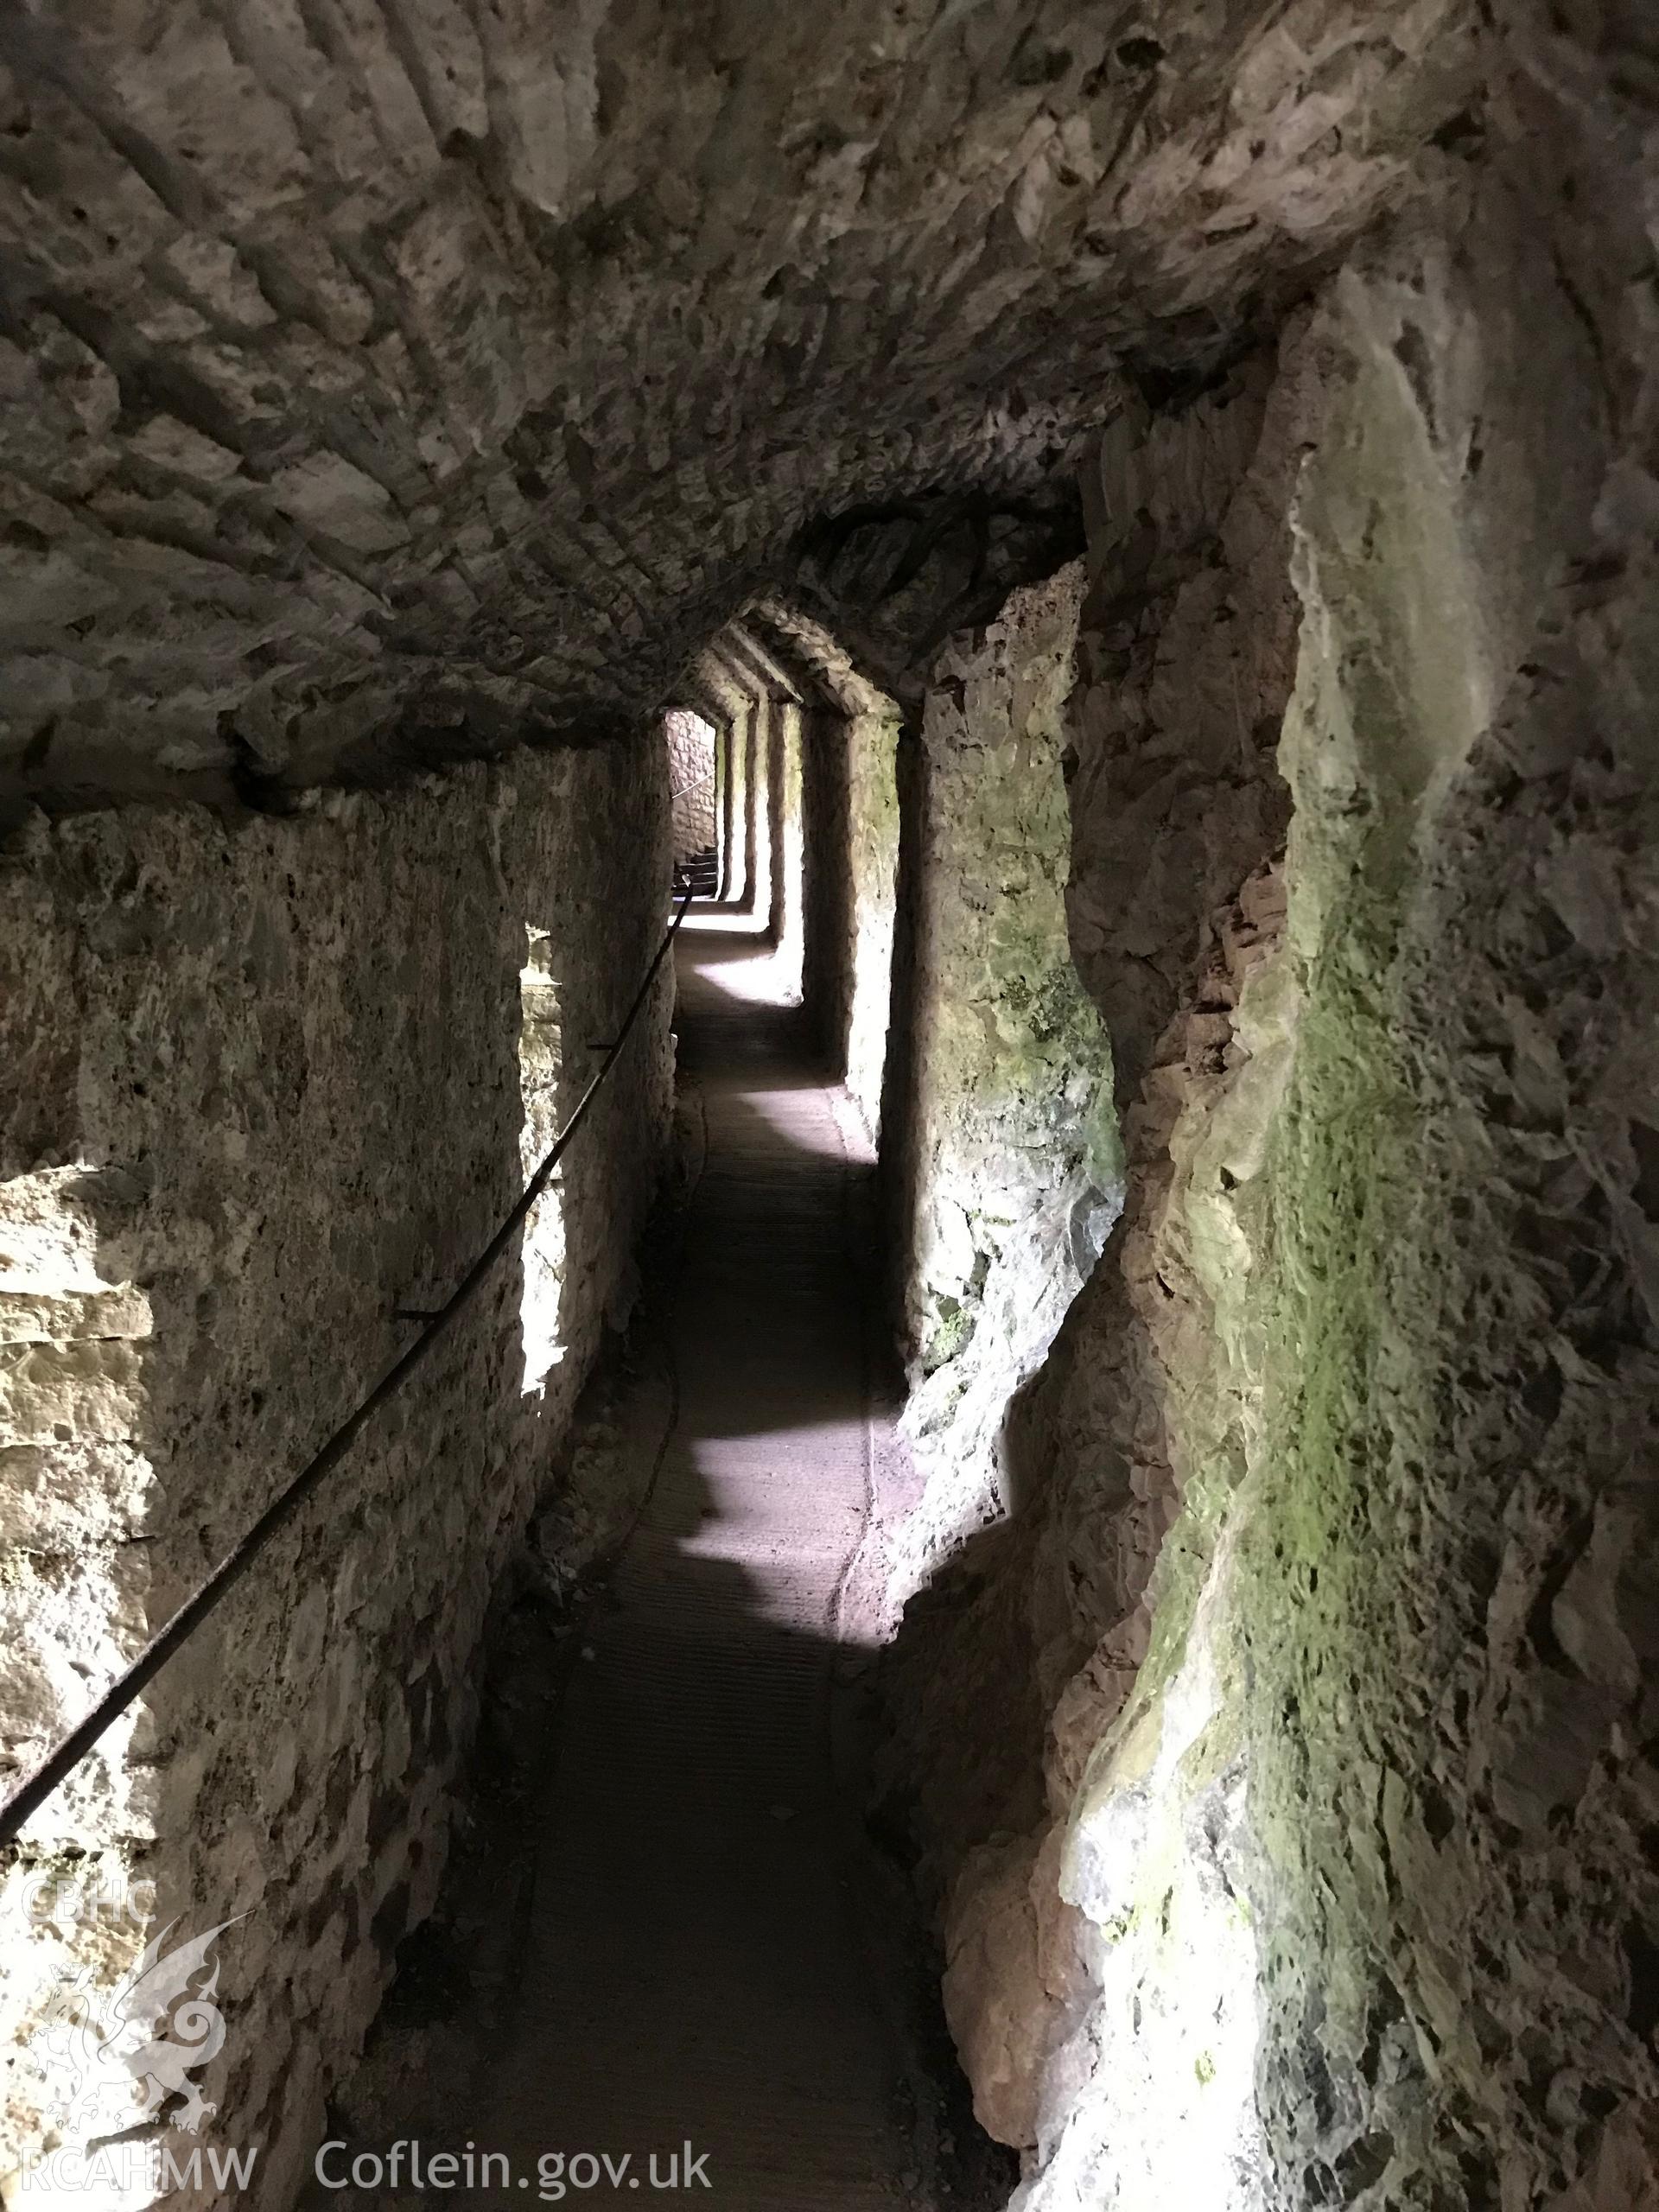 Digital colour photograph of Carreg Cennen Cave, Dyffryn Cennen, Llandeilo, taken by Paul R. Davis on 7th May 2019.